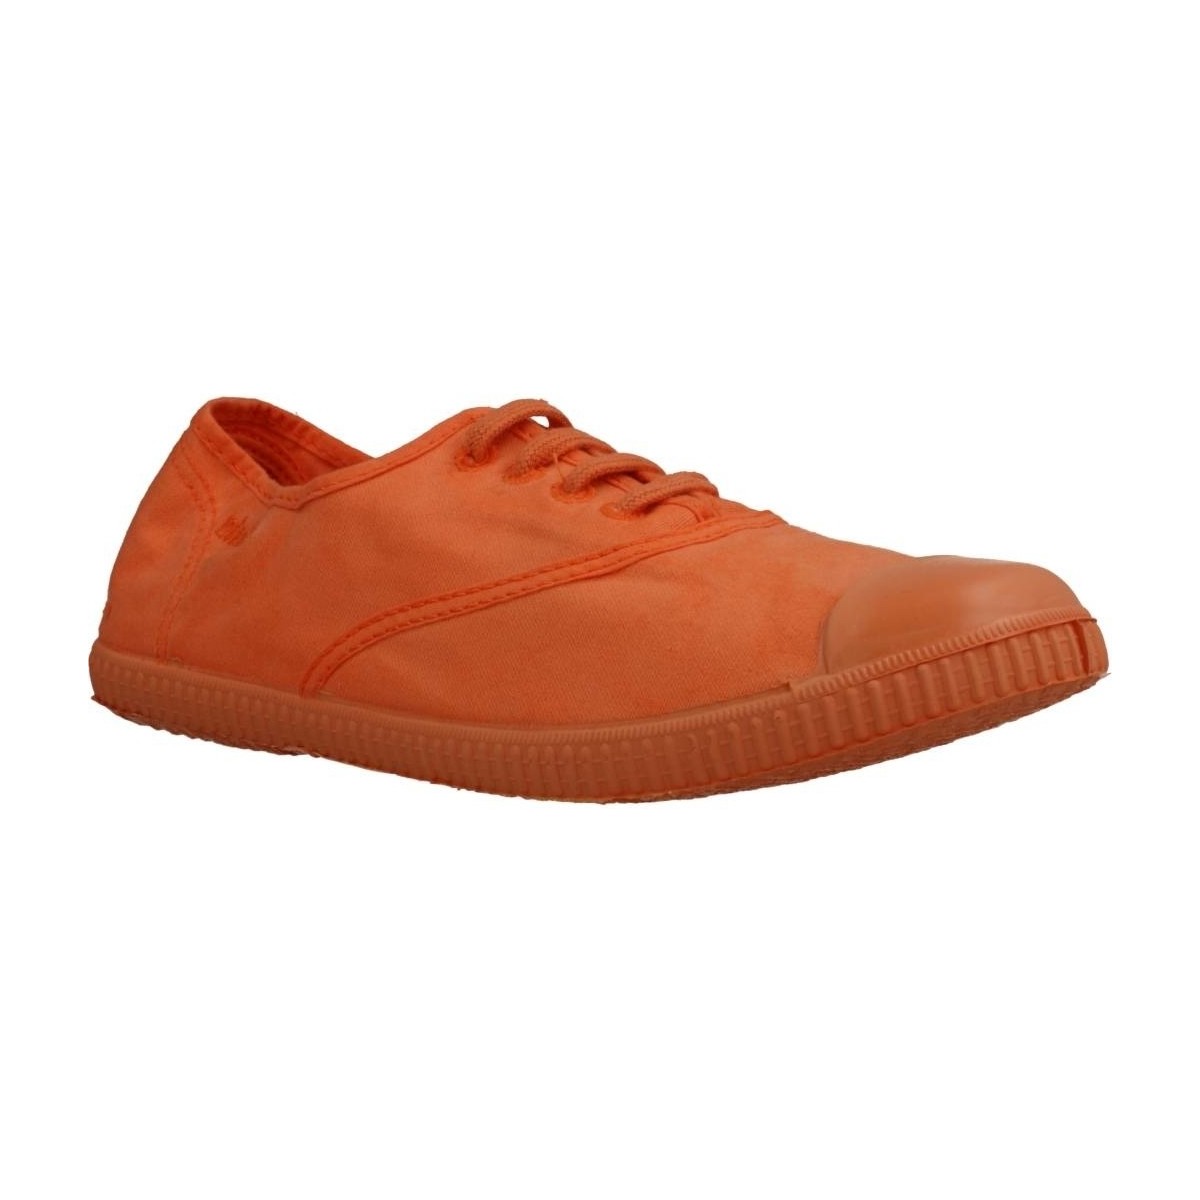 Zapatos Mujer Deportivas Moda Victoria 26621V Naranja